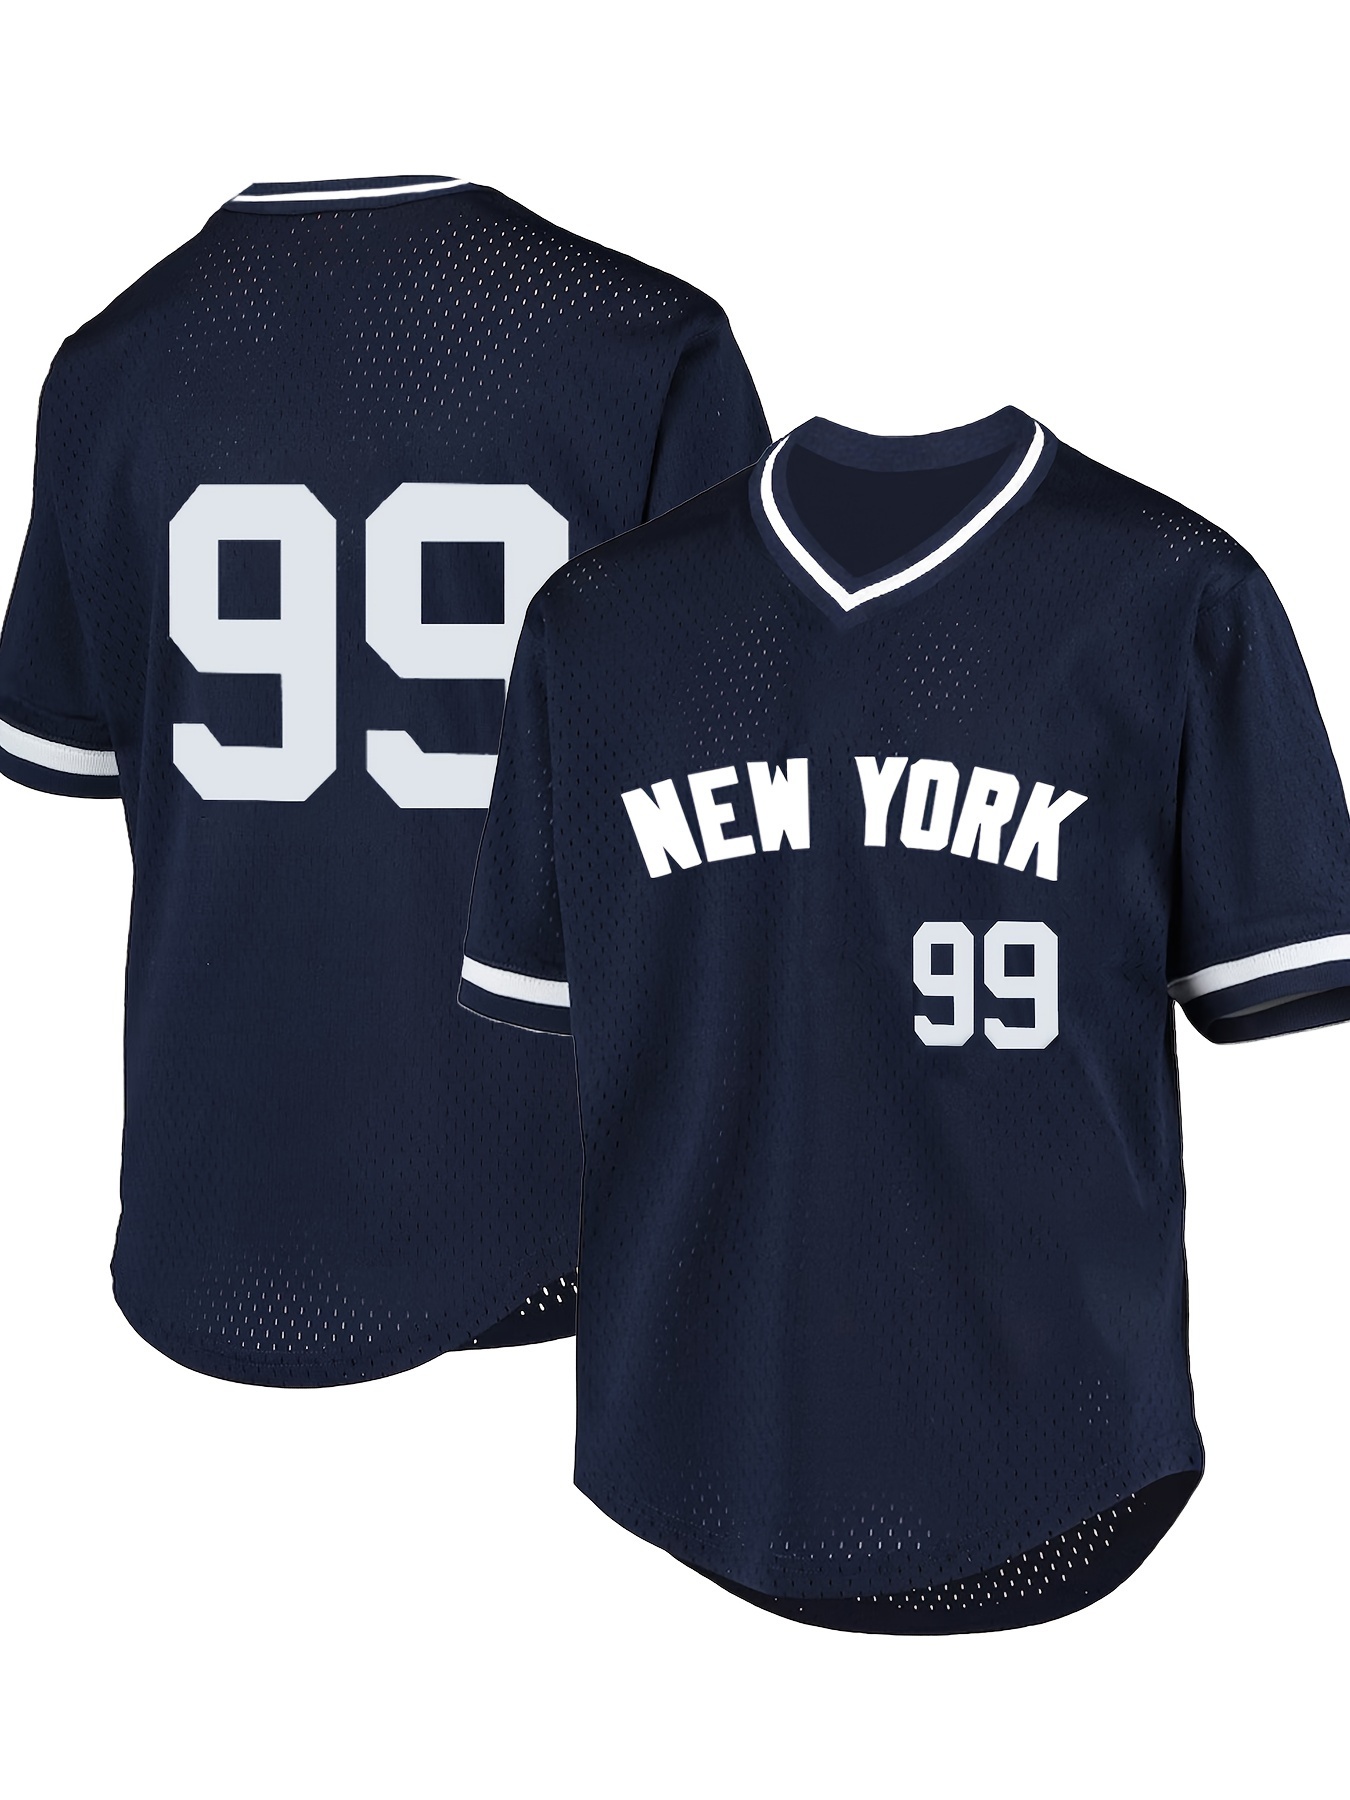 99 yankees jersey